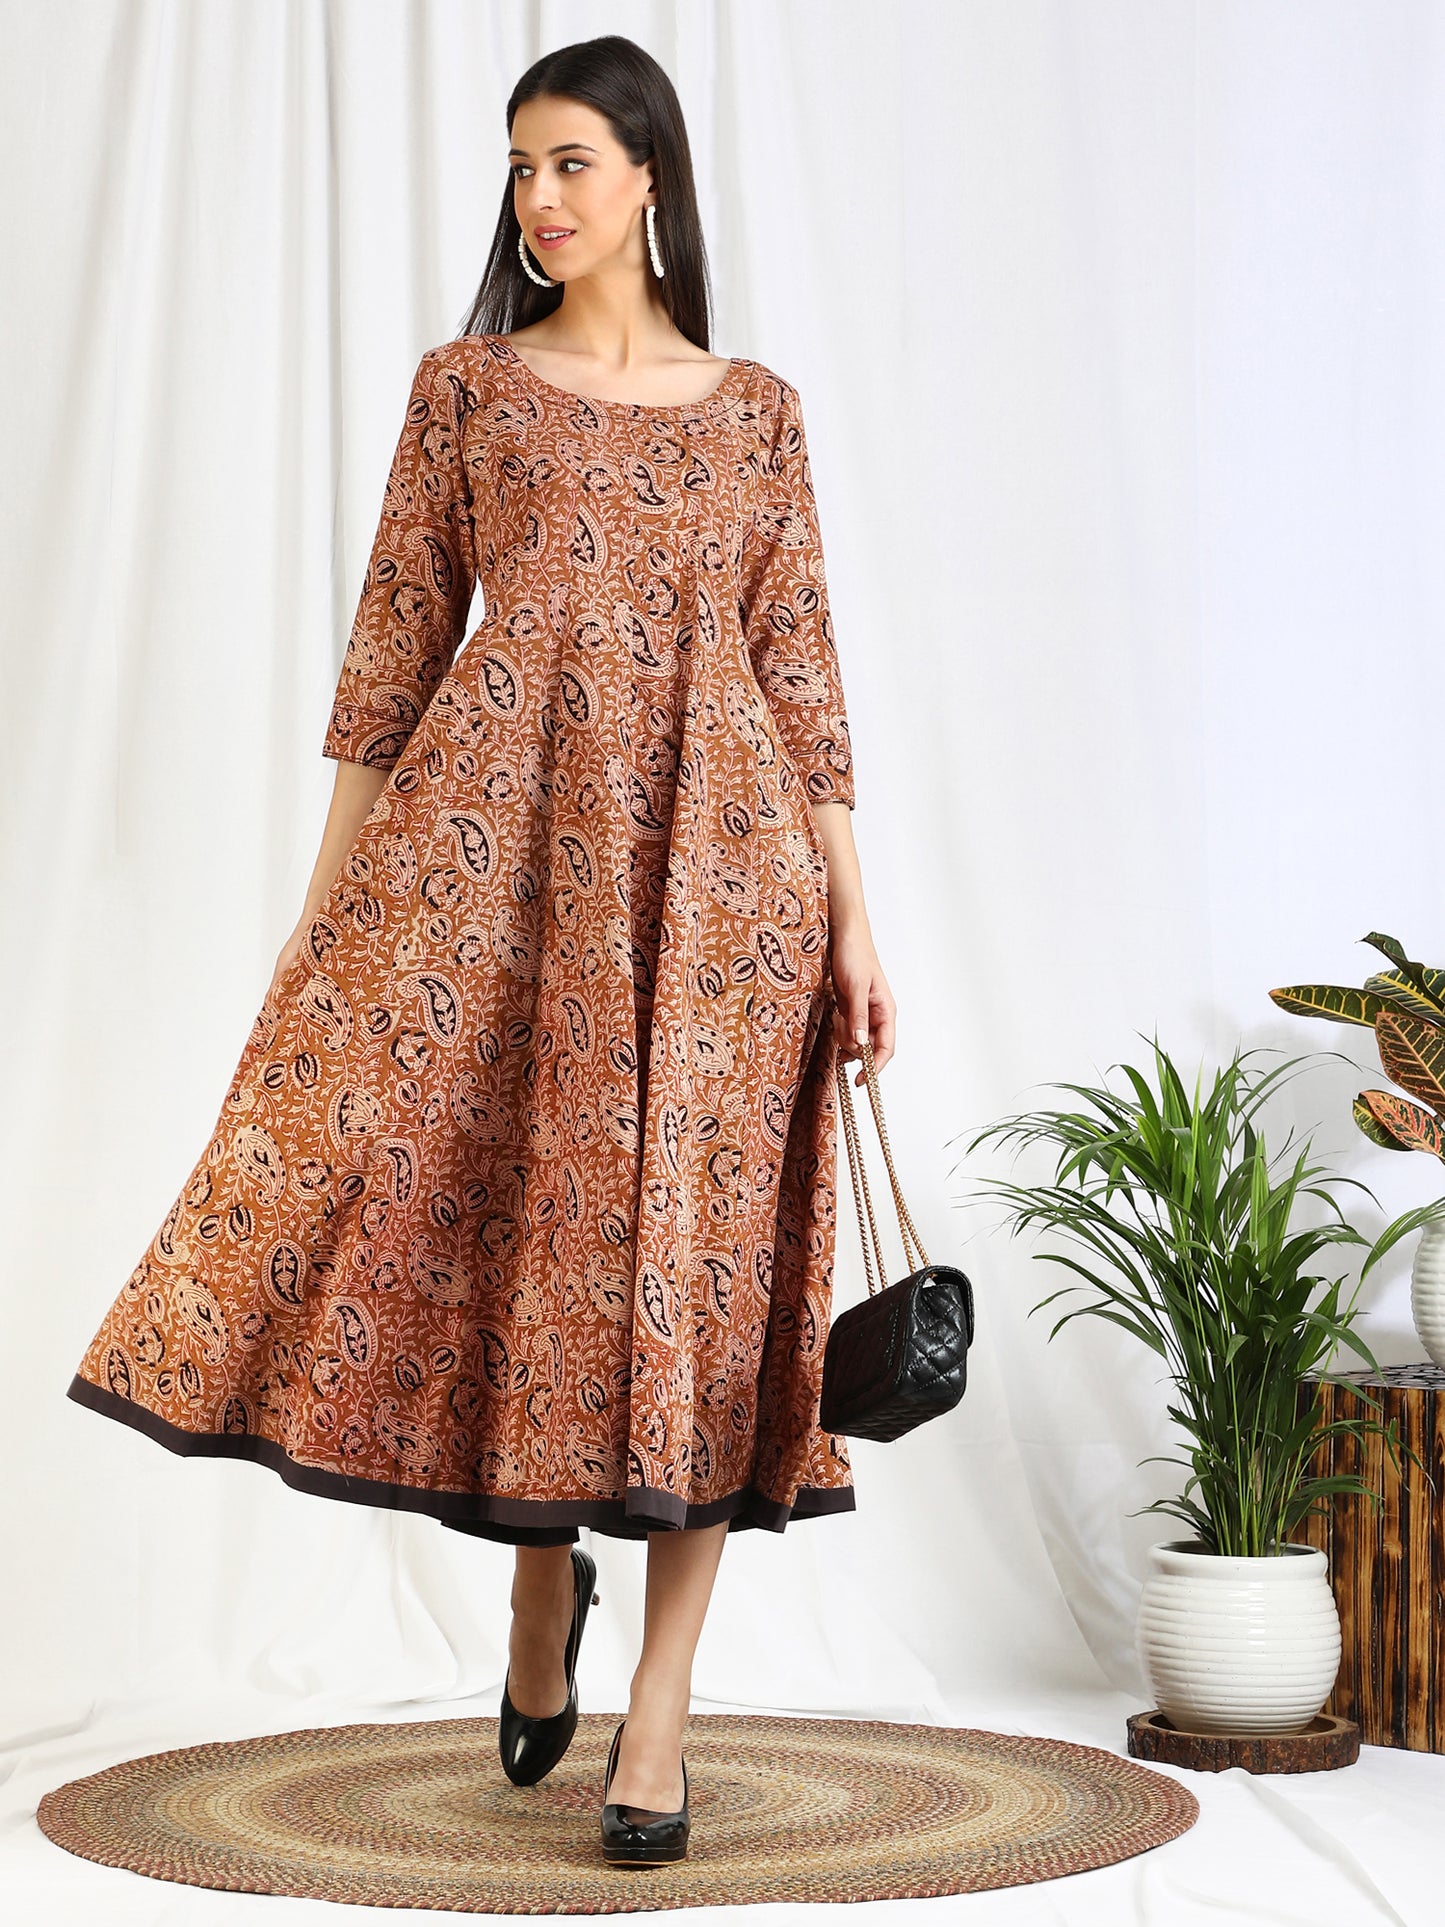 Brown paisley print cotton dress for women